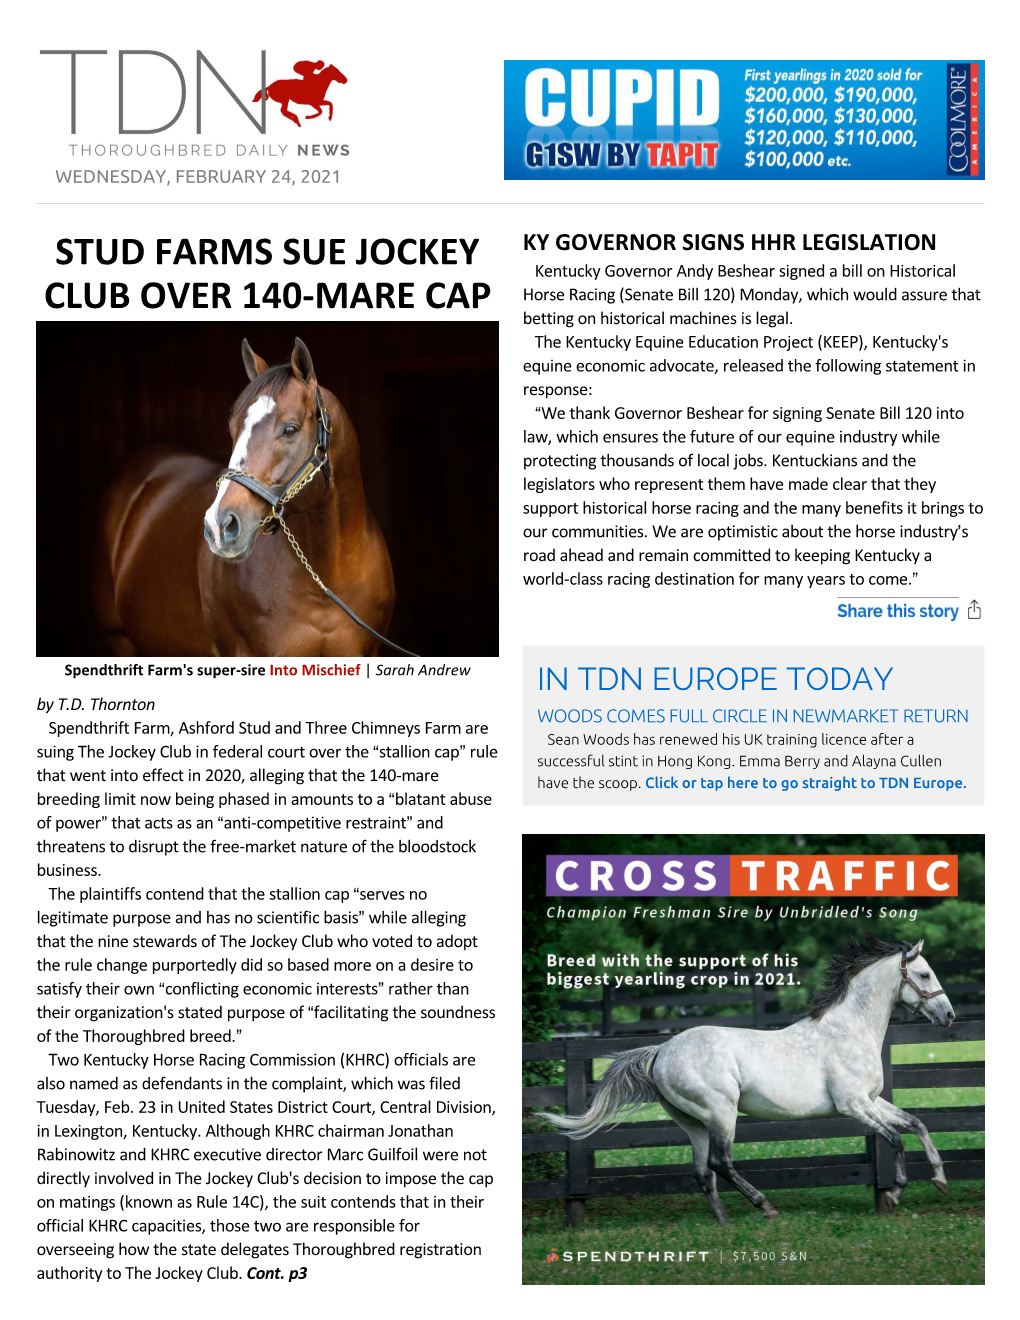 Stud Farms Sue Jockey Club Over 140-Mare